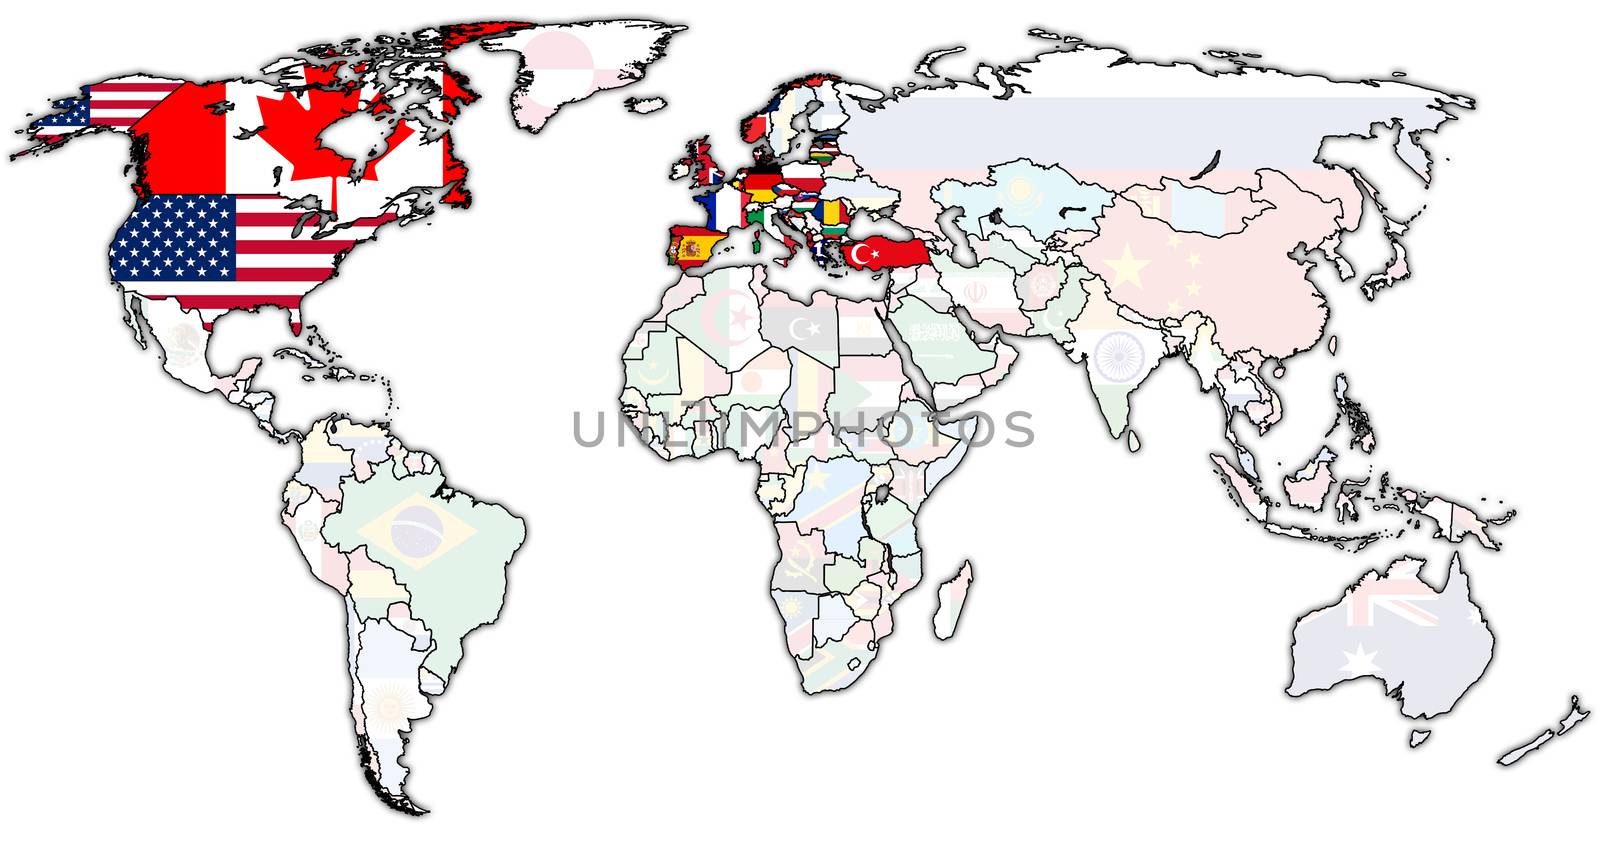 North Atlantic Treaty Organization onl world map by michal812